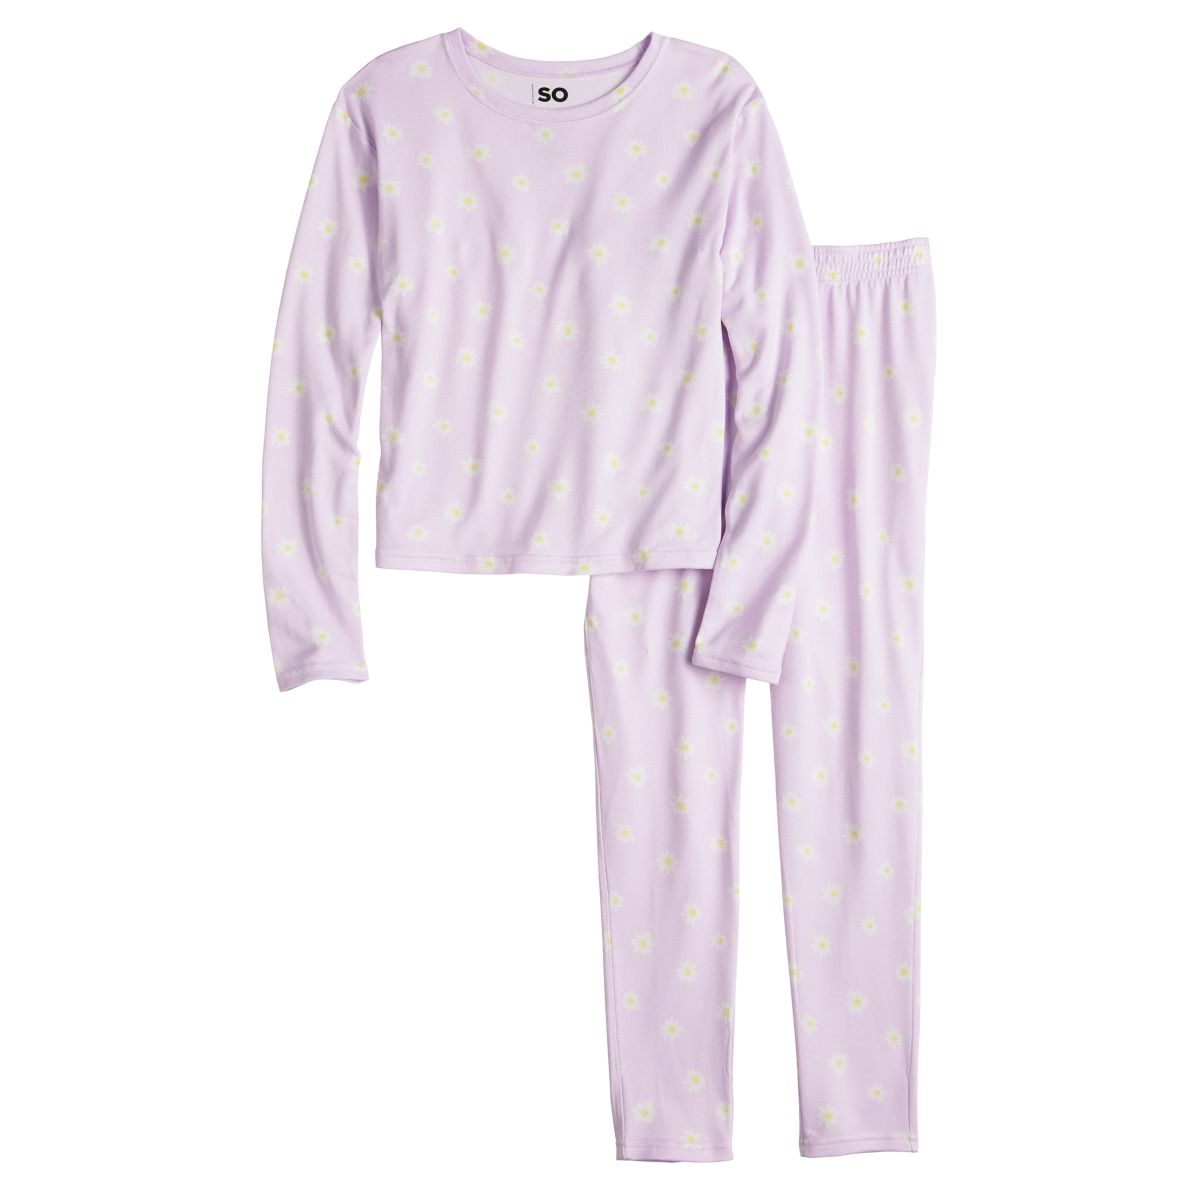 Girls 4-20 SO® Cozy Top & Bottoms Pajama Set in Regular & Plus Size SO